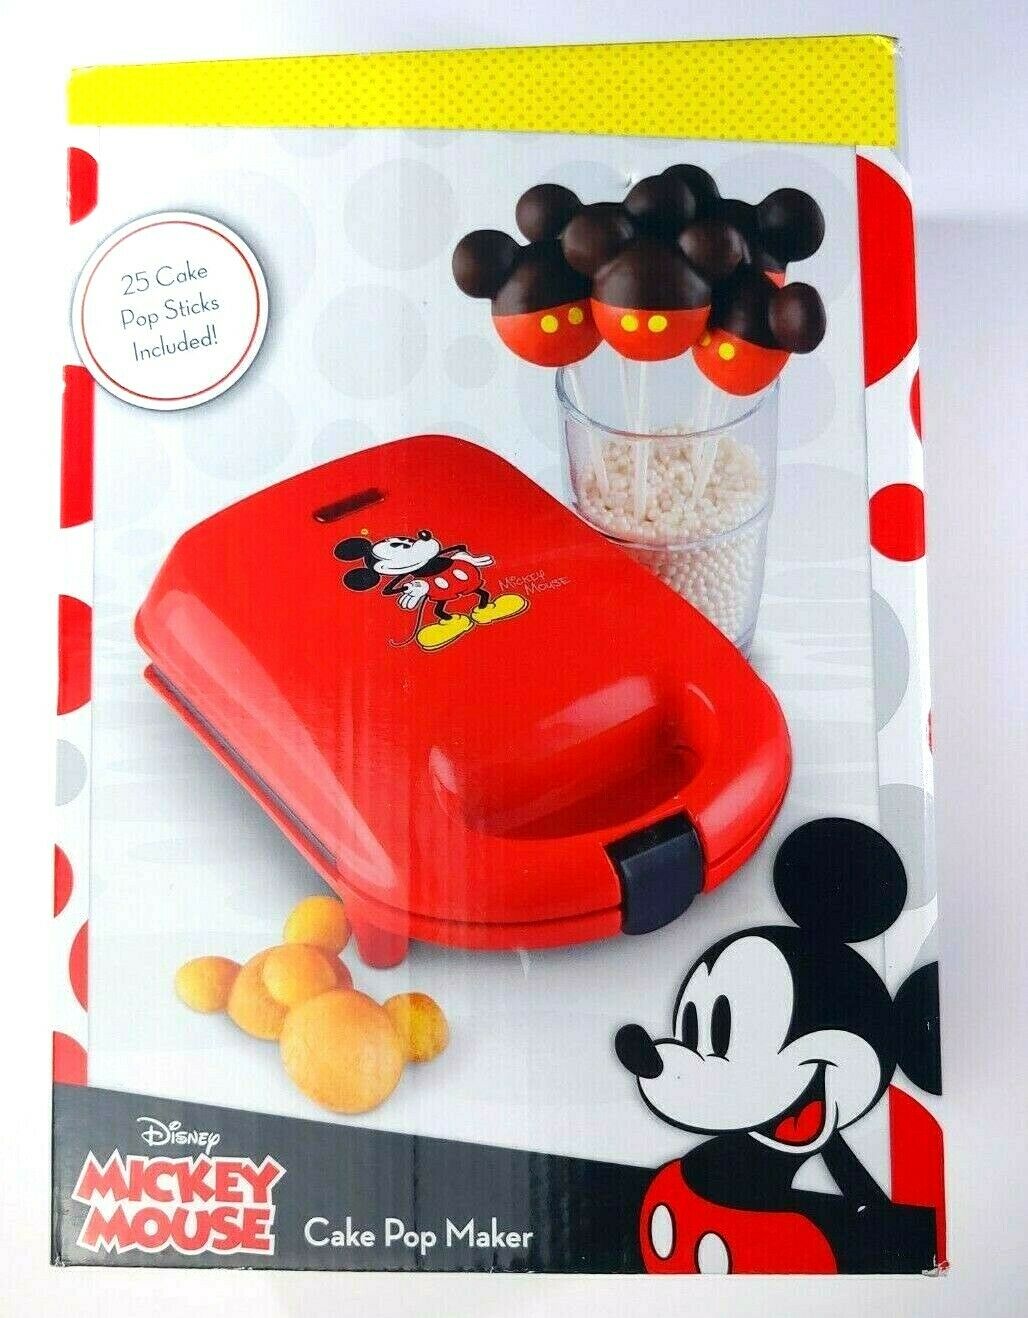 Disney Dcm-8 Mickey Cake Pop Maker Mini, Red Brand New Box Slightly Damaged